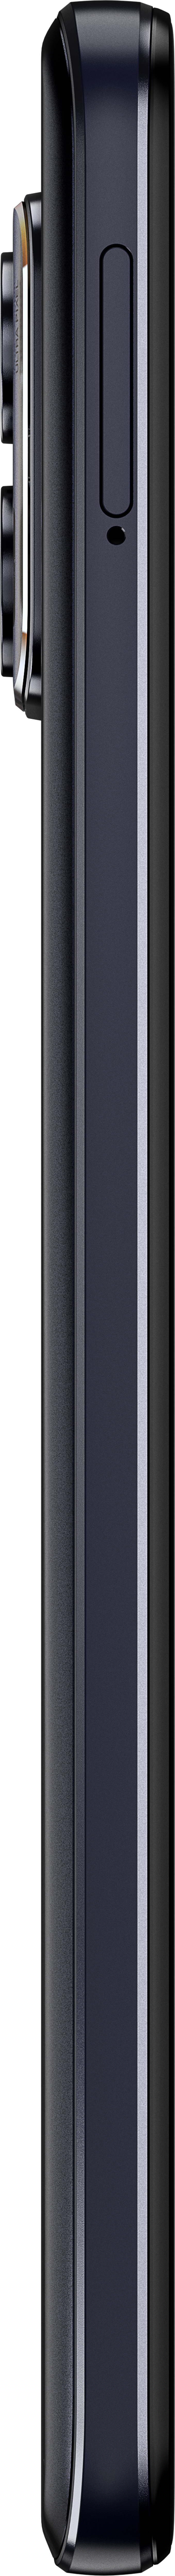 Motorola Moto G73 5G 256GB Sininen